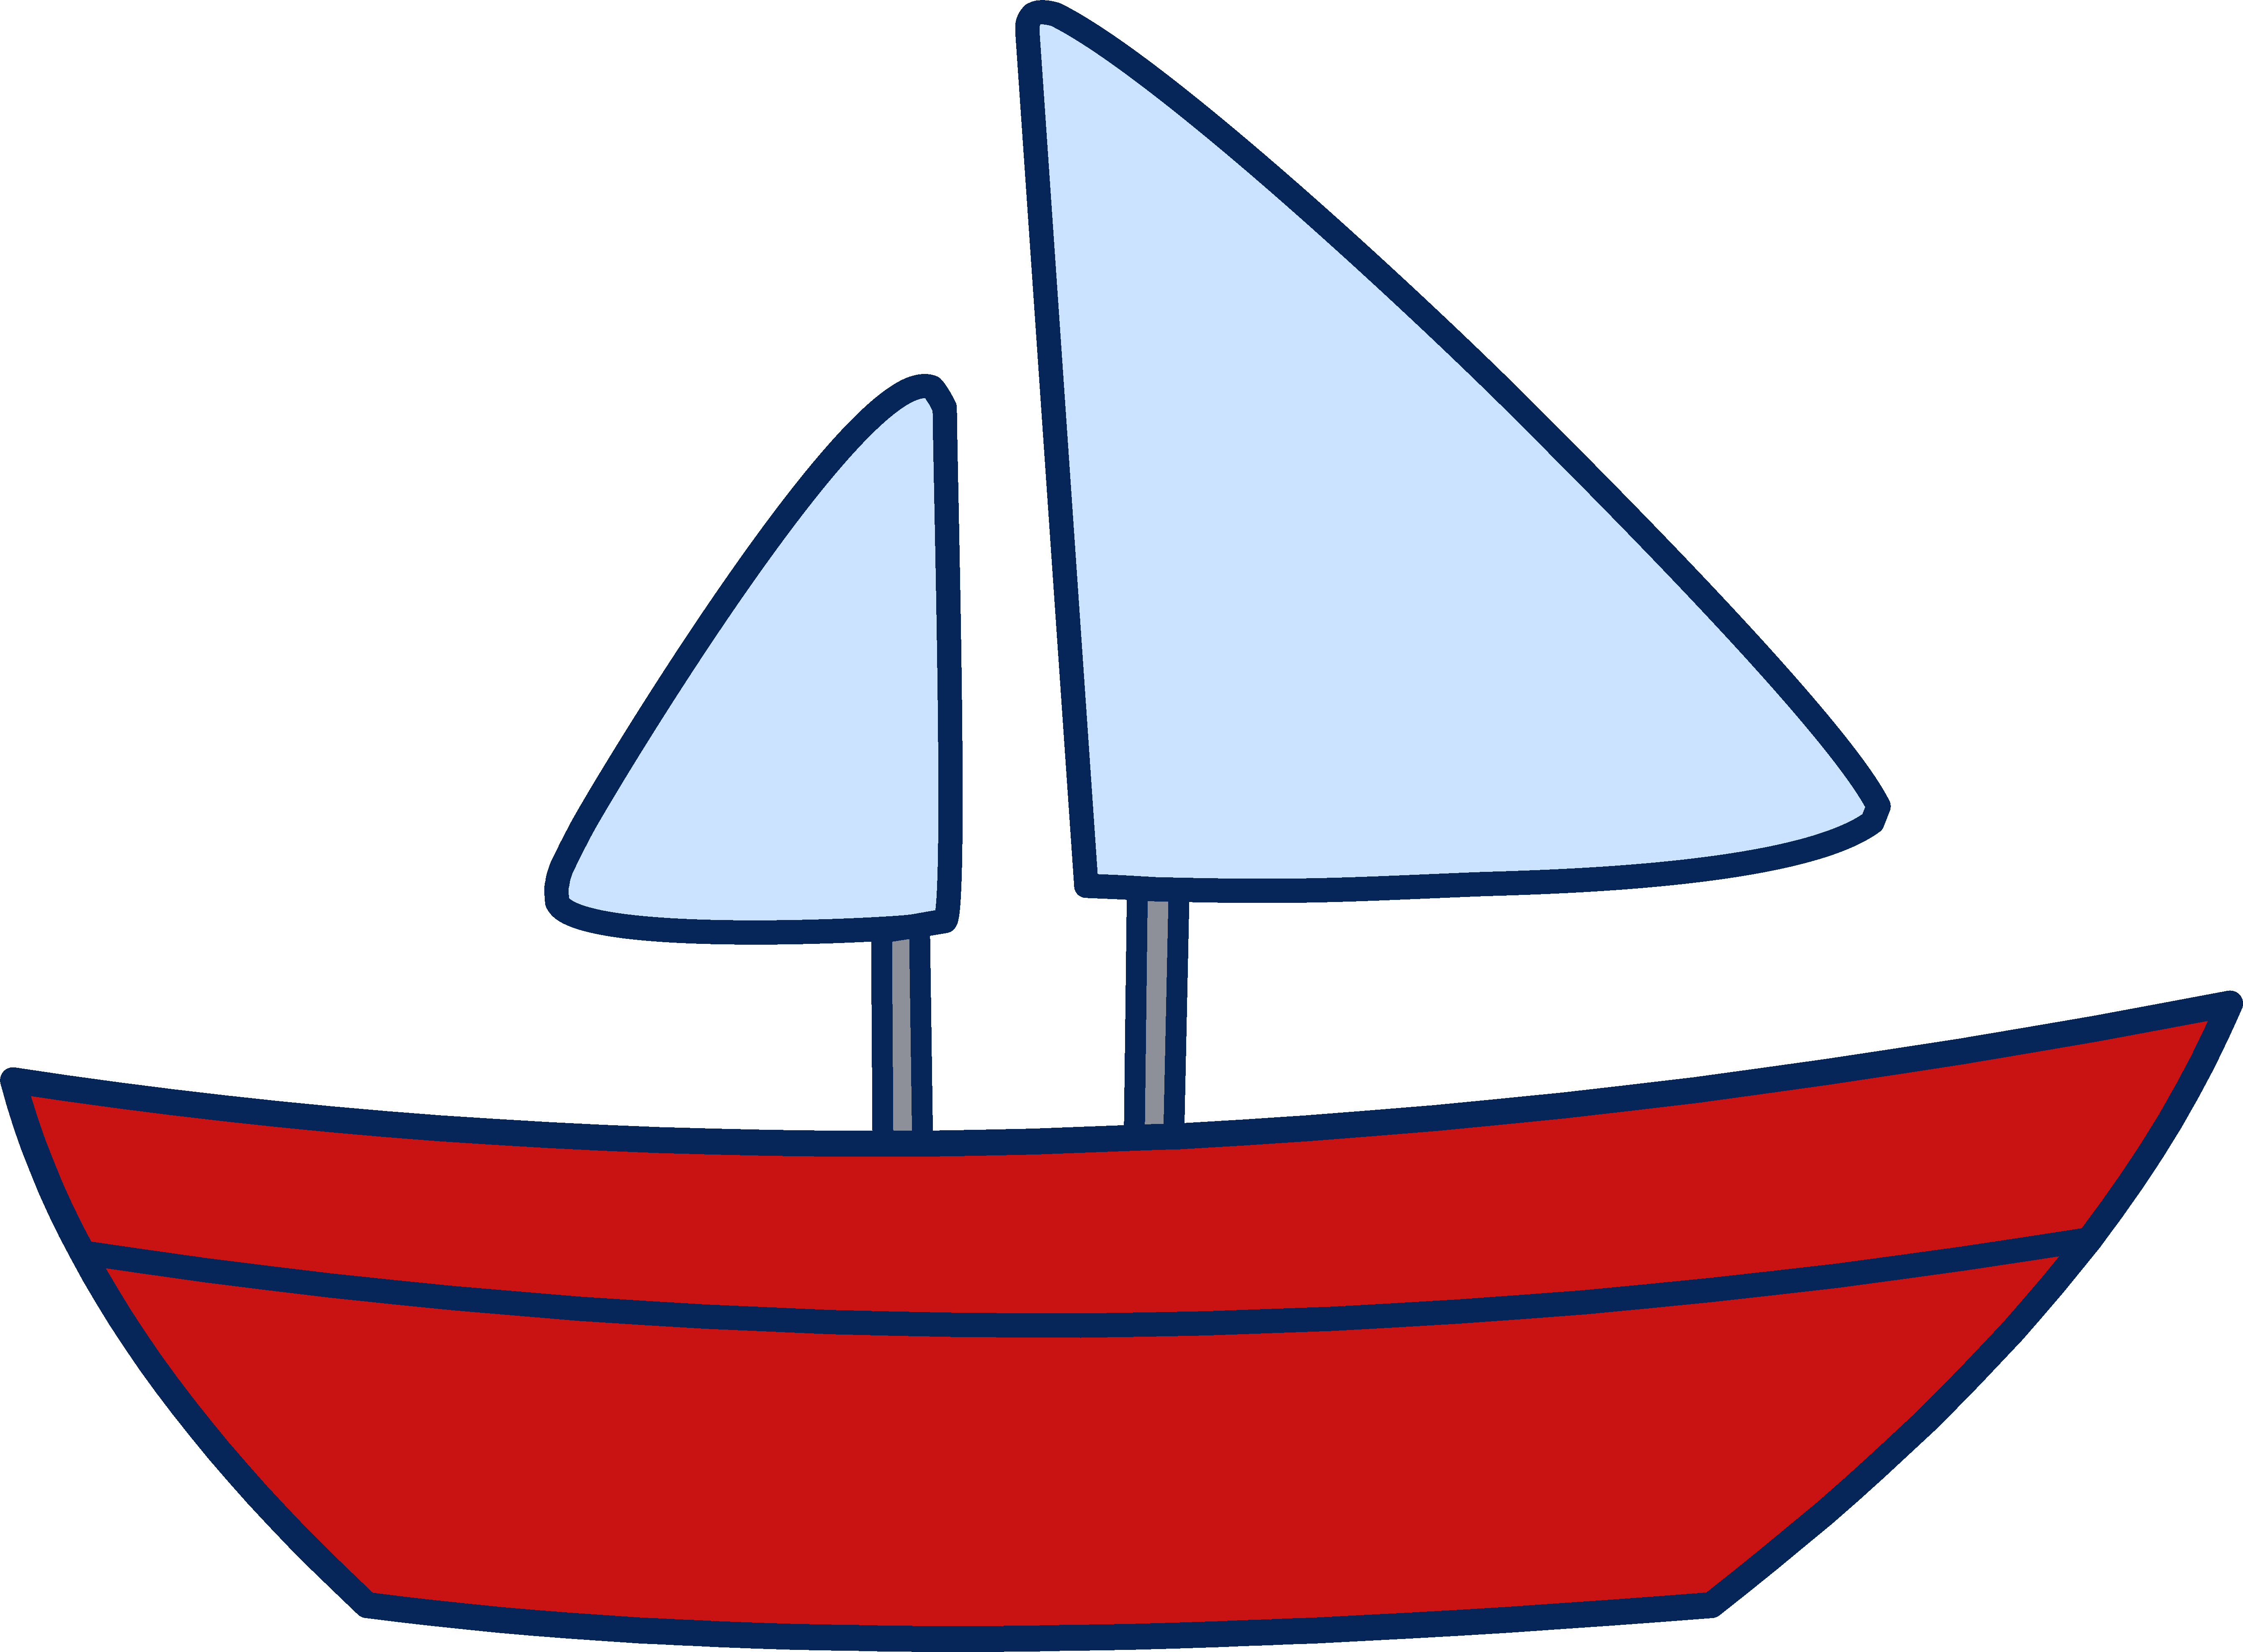 Sailboat clipart #6, Download drawings